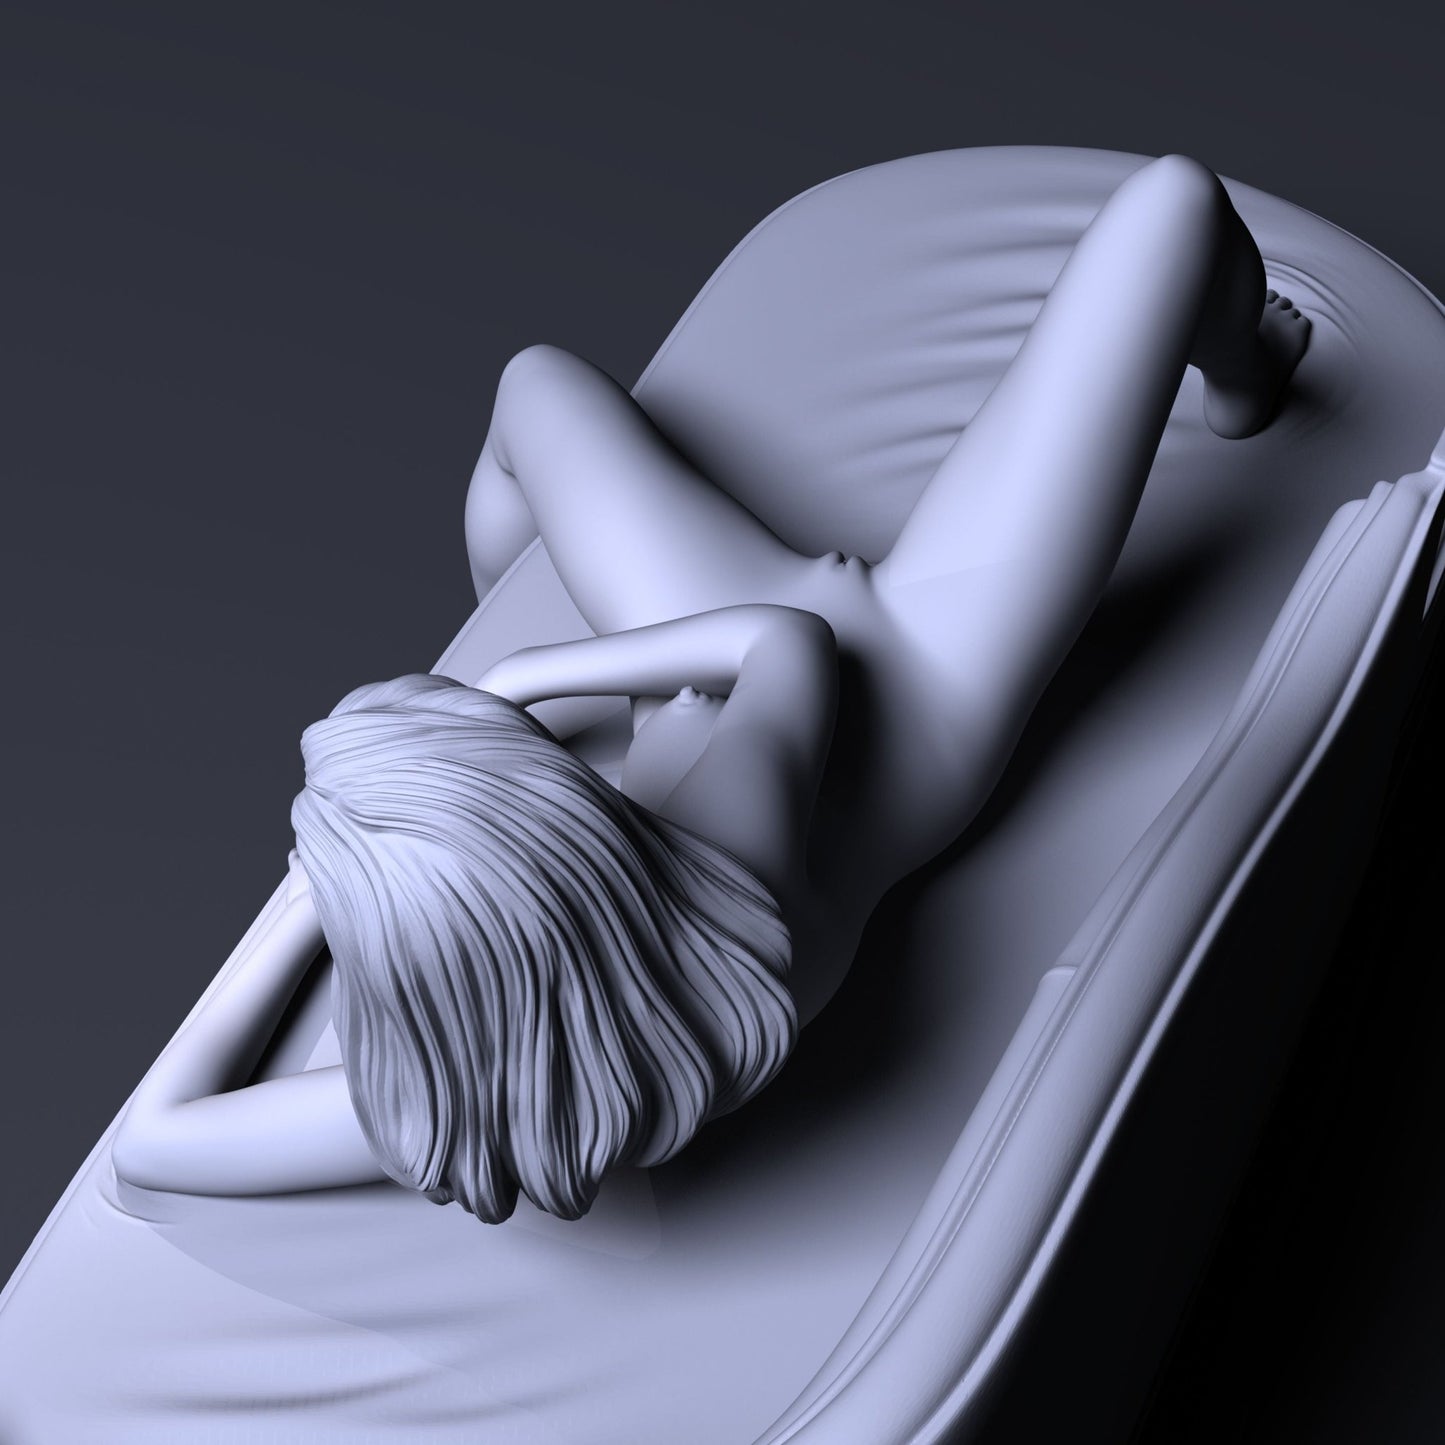 Sofa girl 2 | 3D Printed | Fanart | Unpainted | NSFW Version | Figurine